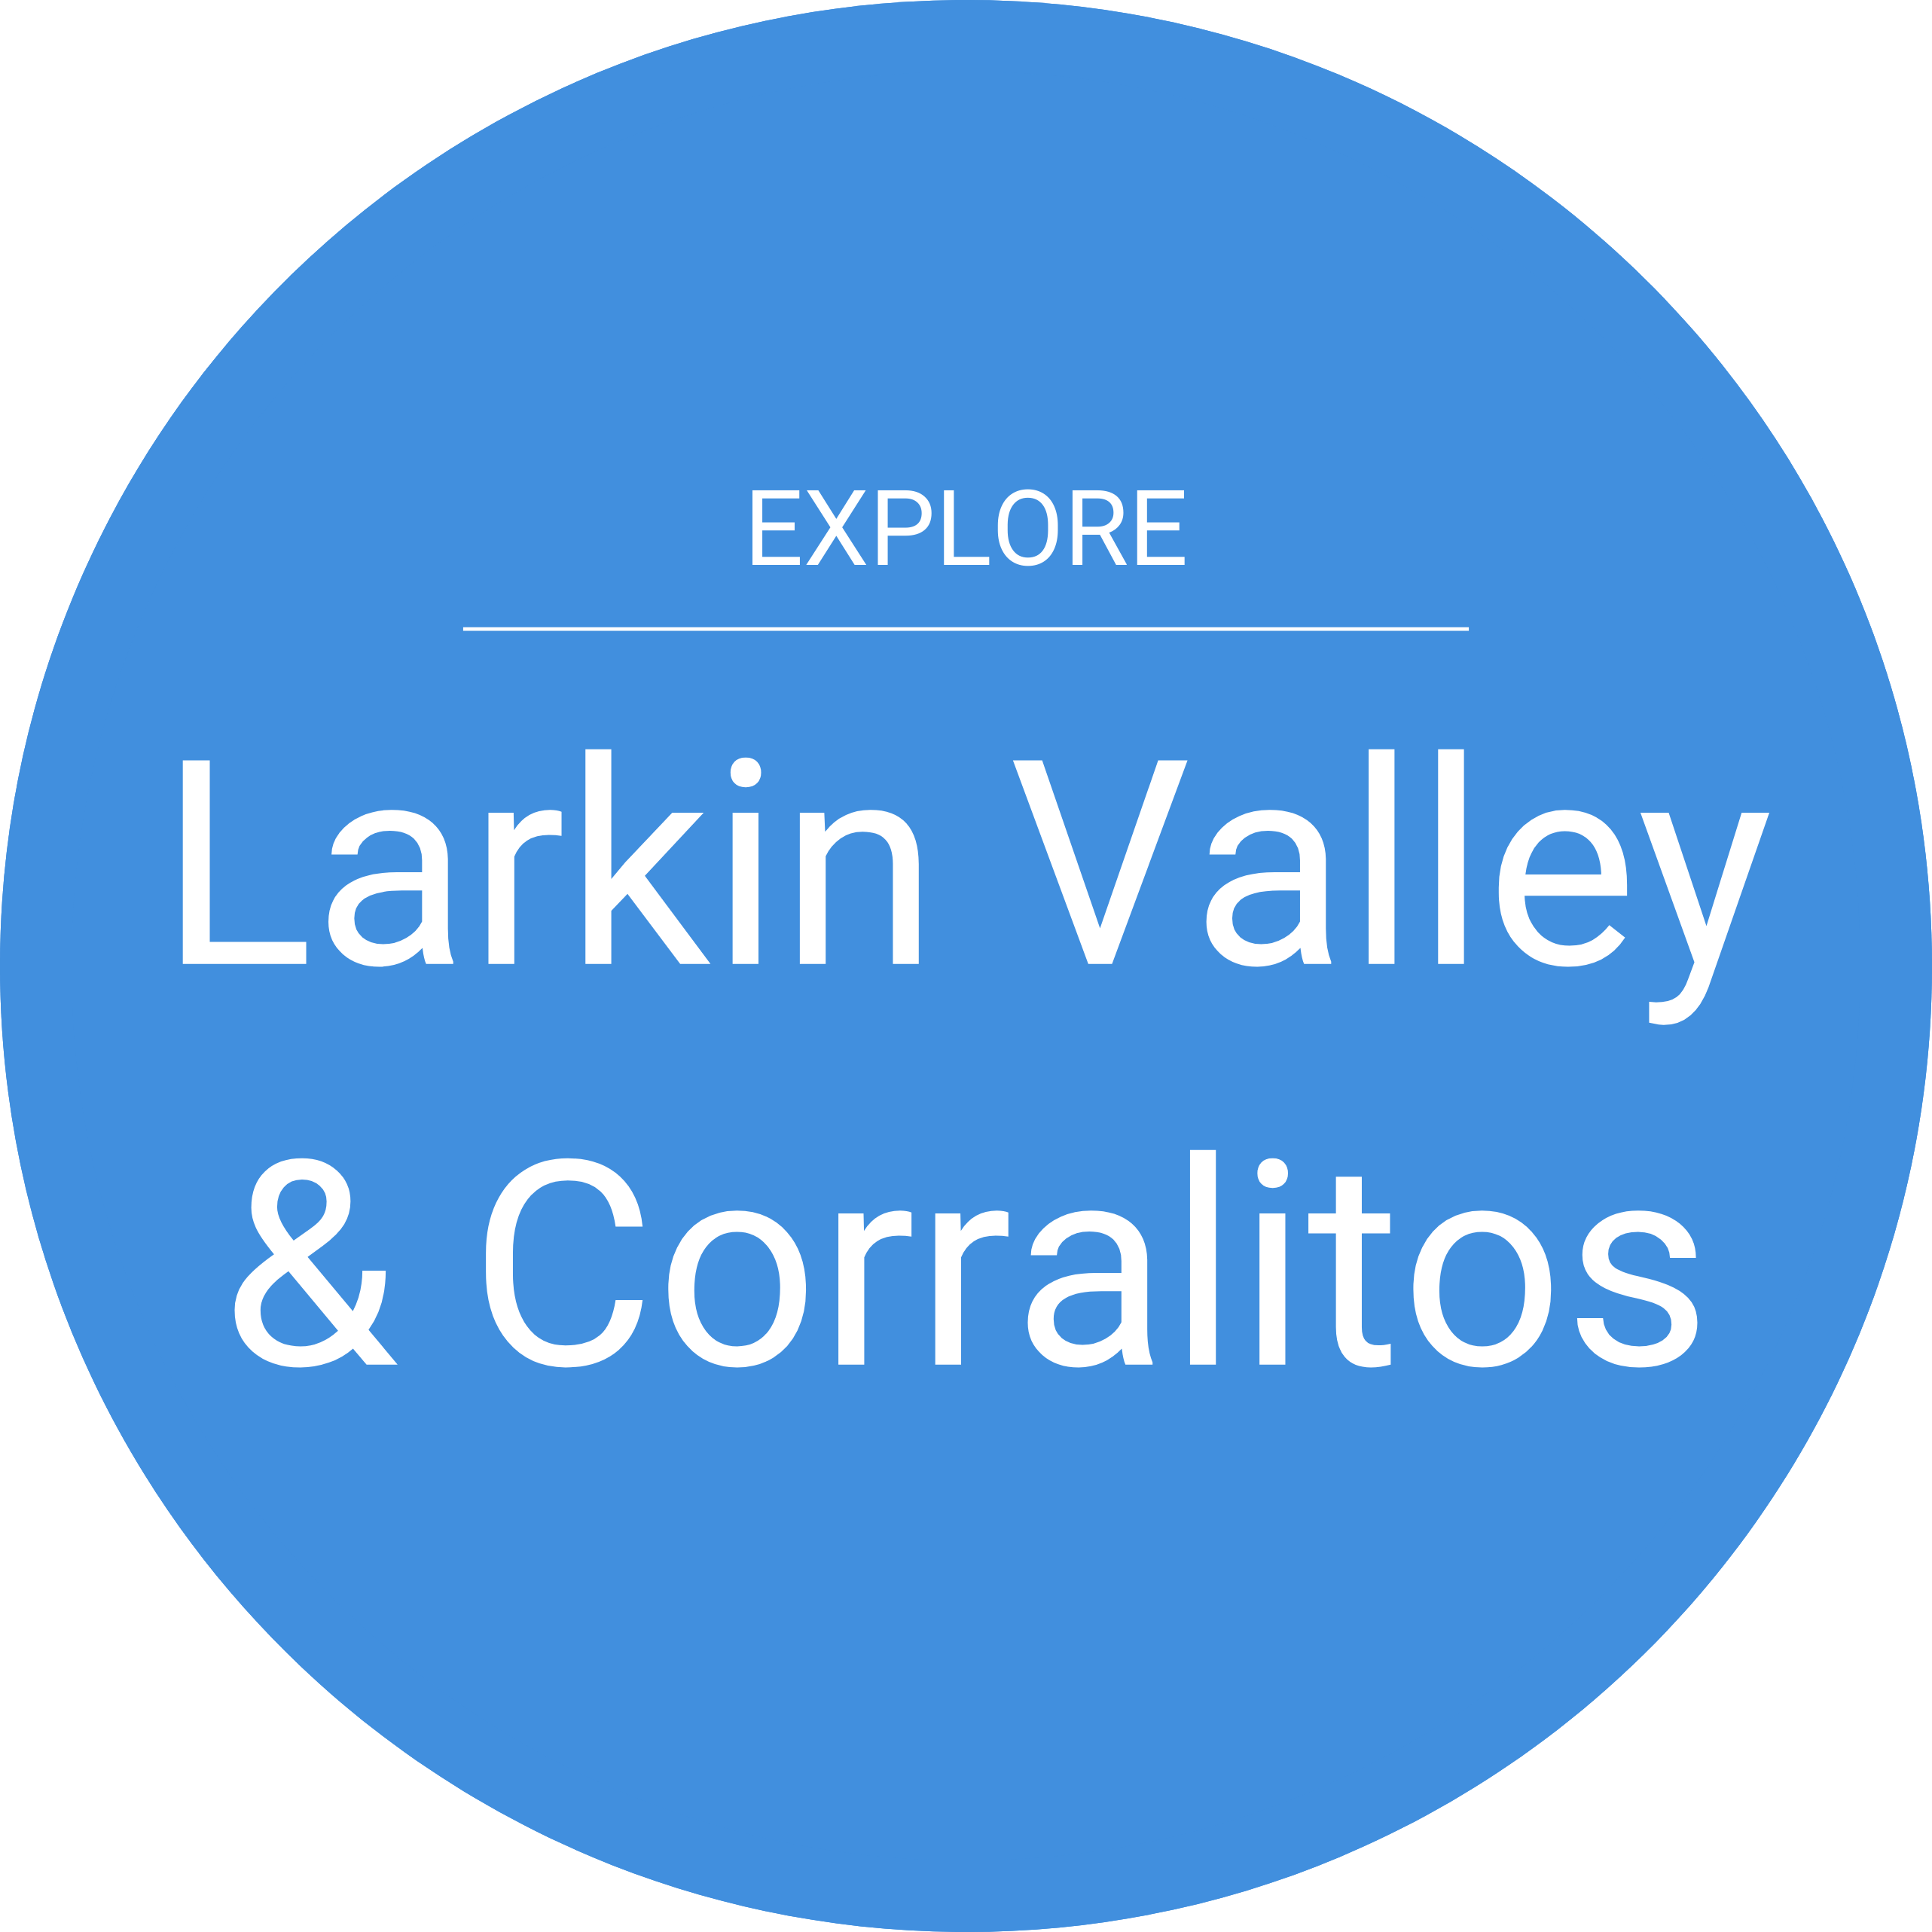 Larkin Valley and Corralitos